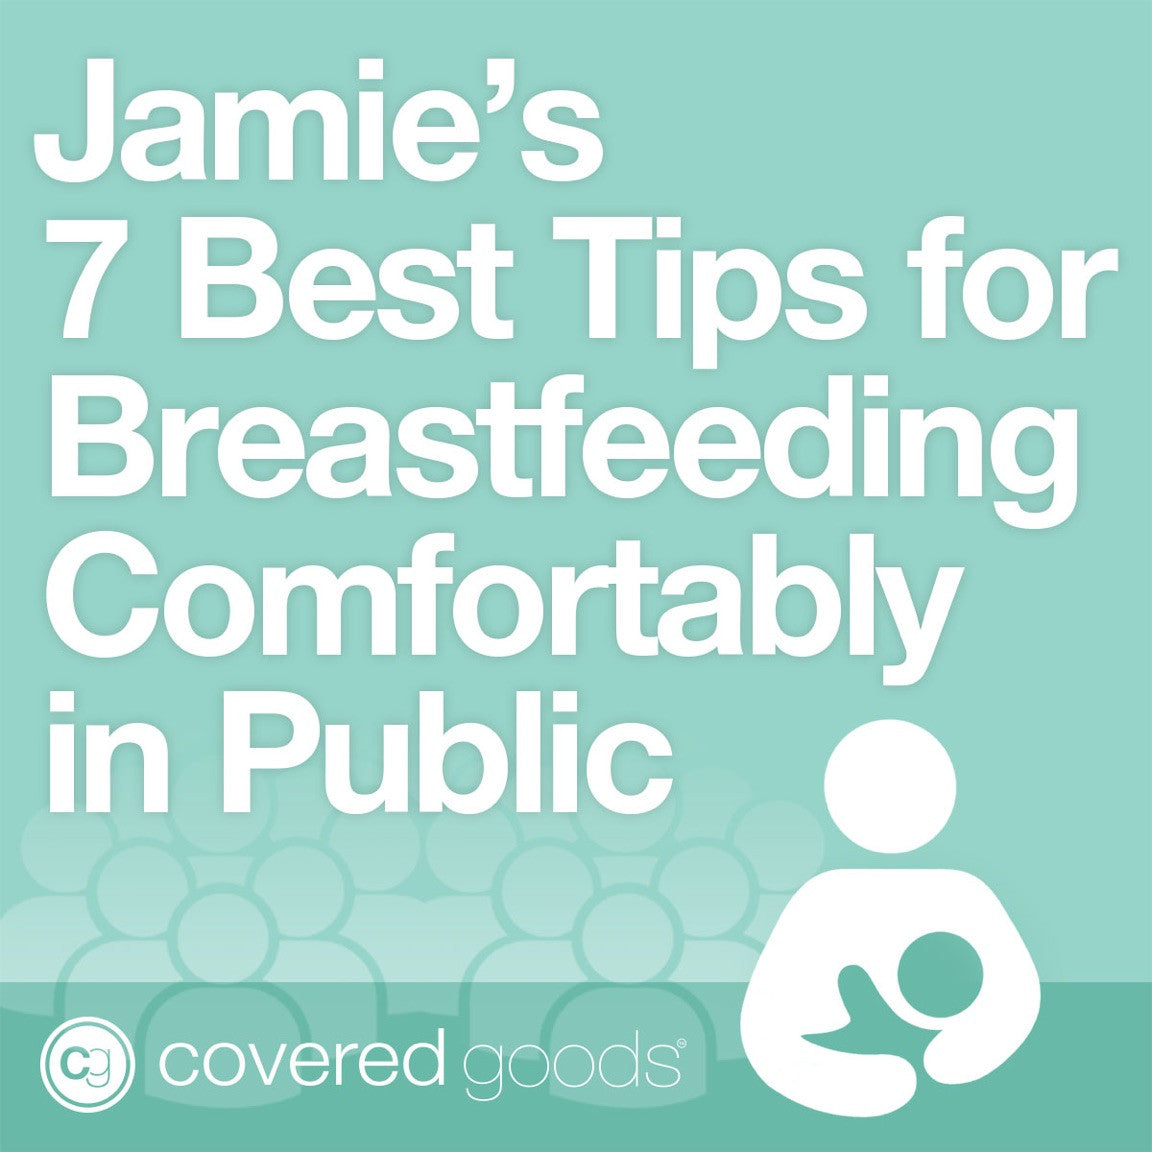 Jamie’s 7 Best Tips for Breastfeeding Comfortably in Public